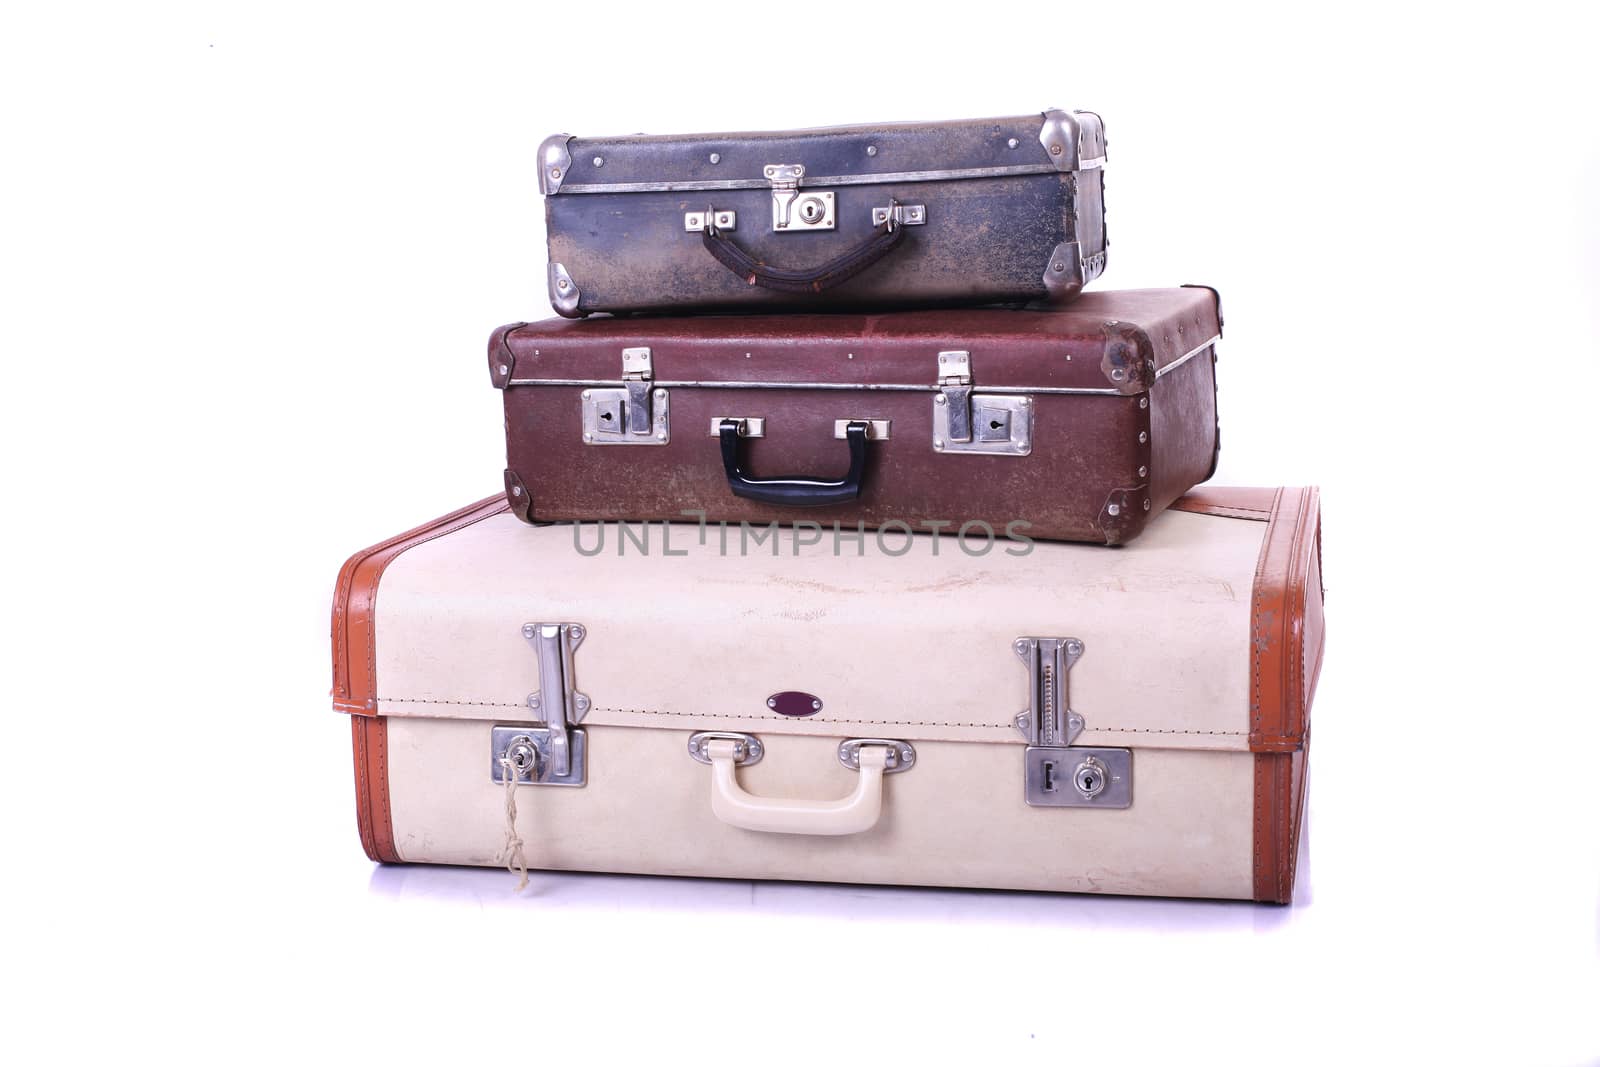  old suitcases by yurii_bizgaimer